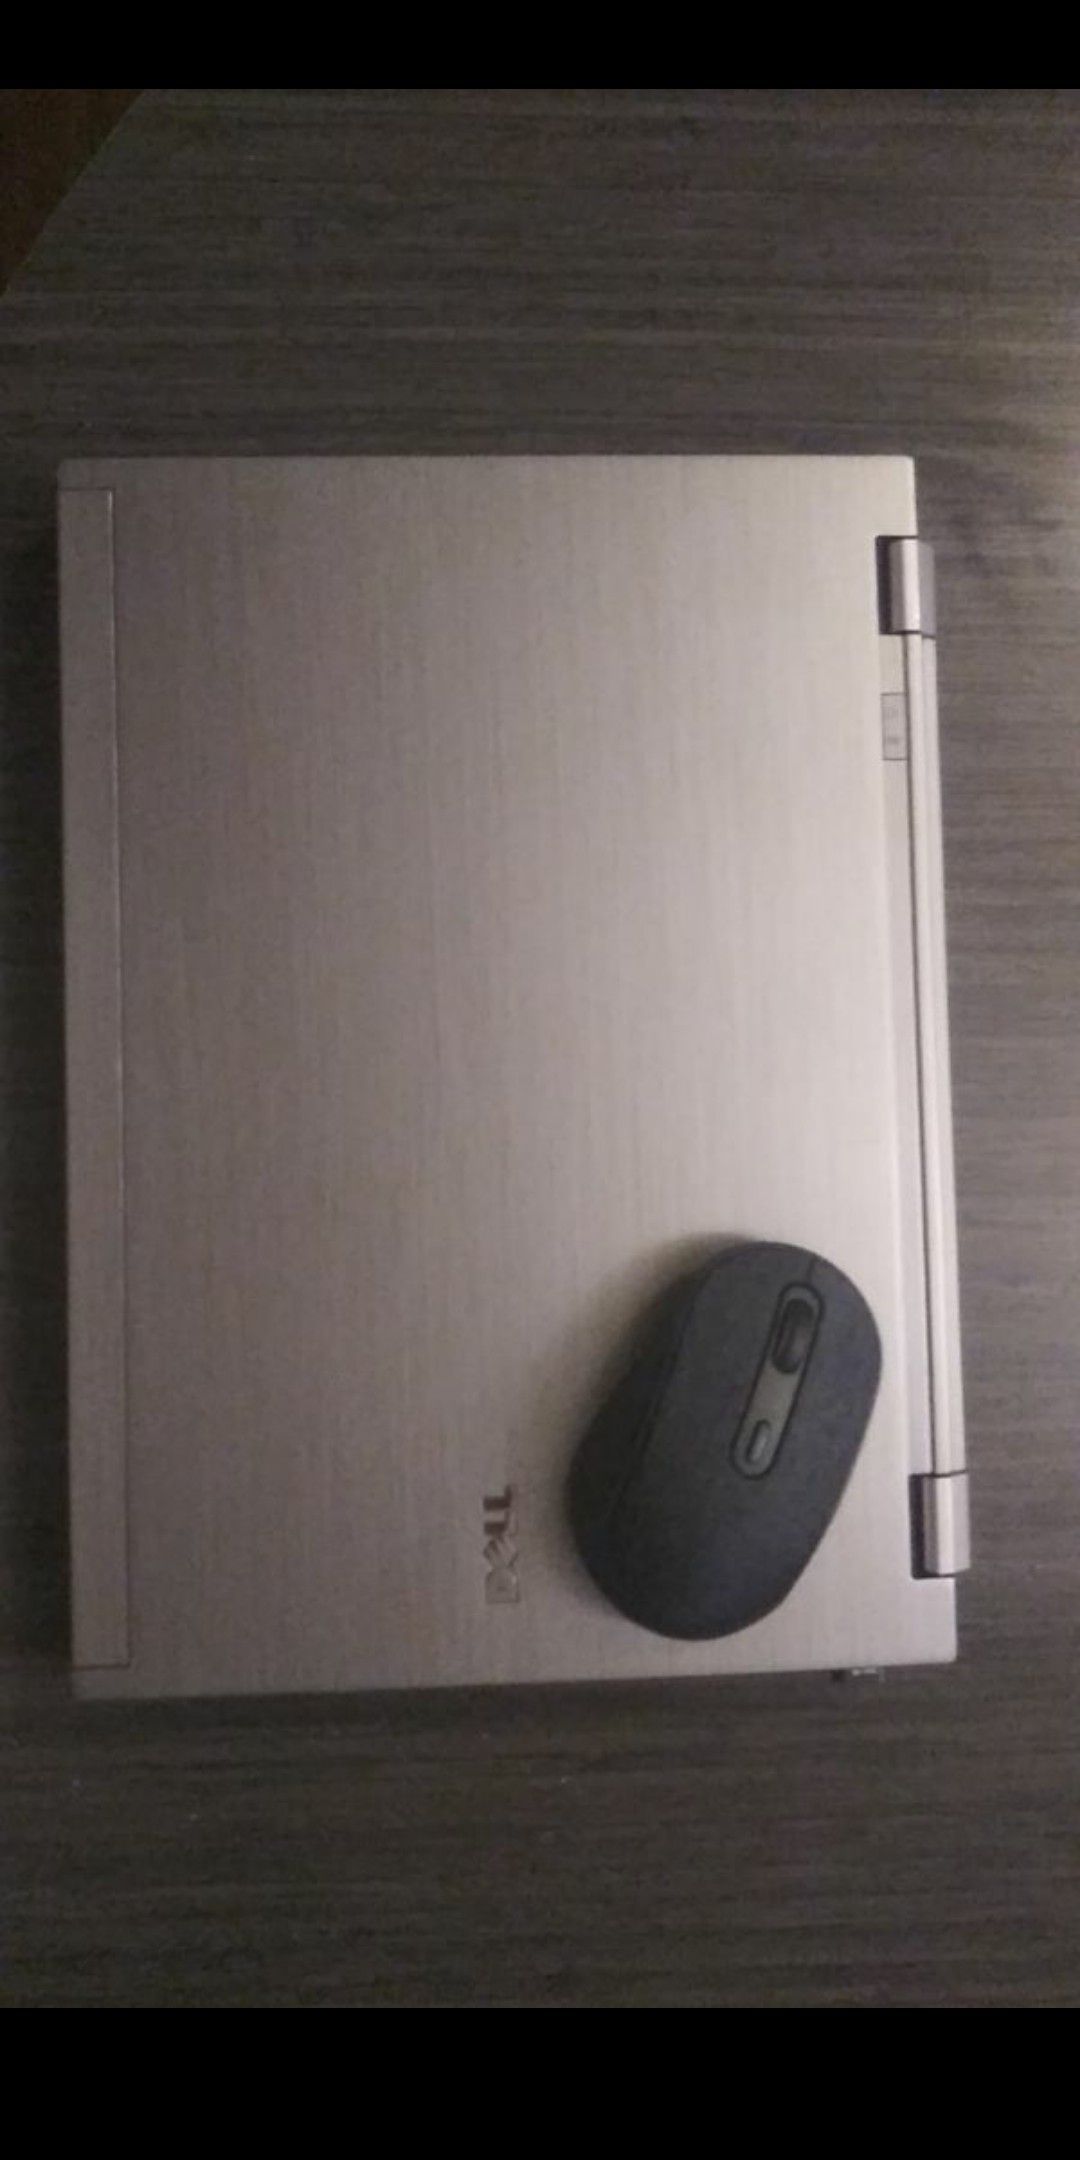 Dell Latitude E6410 Laptop WITH PHOTOSHOP